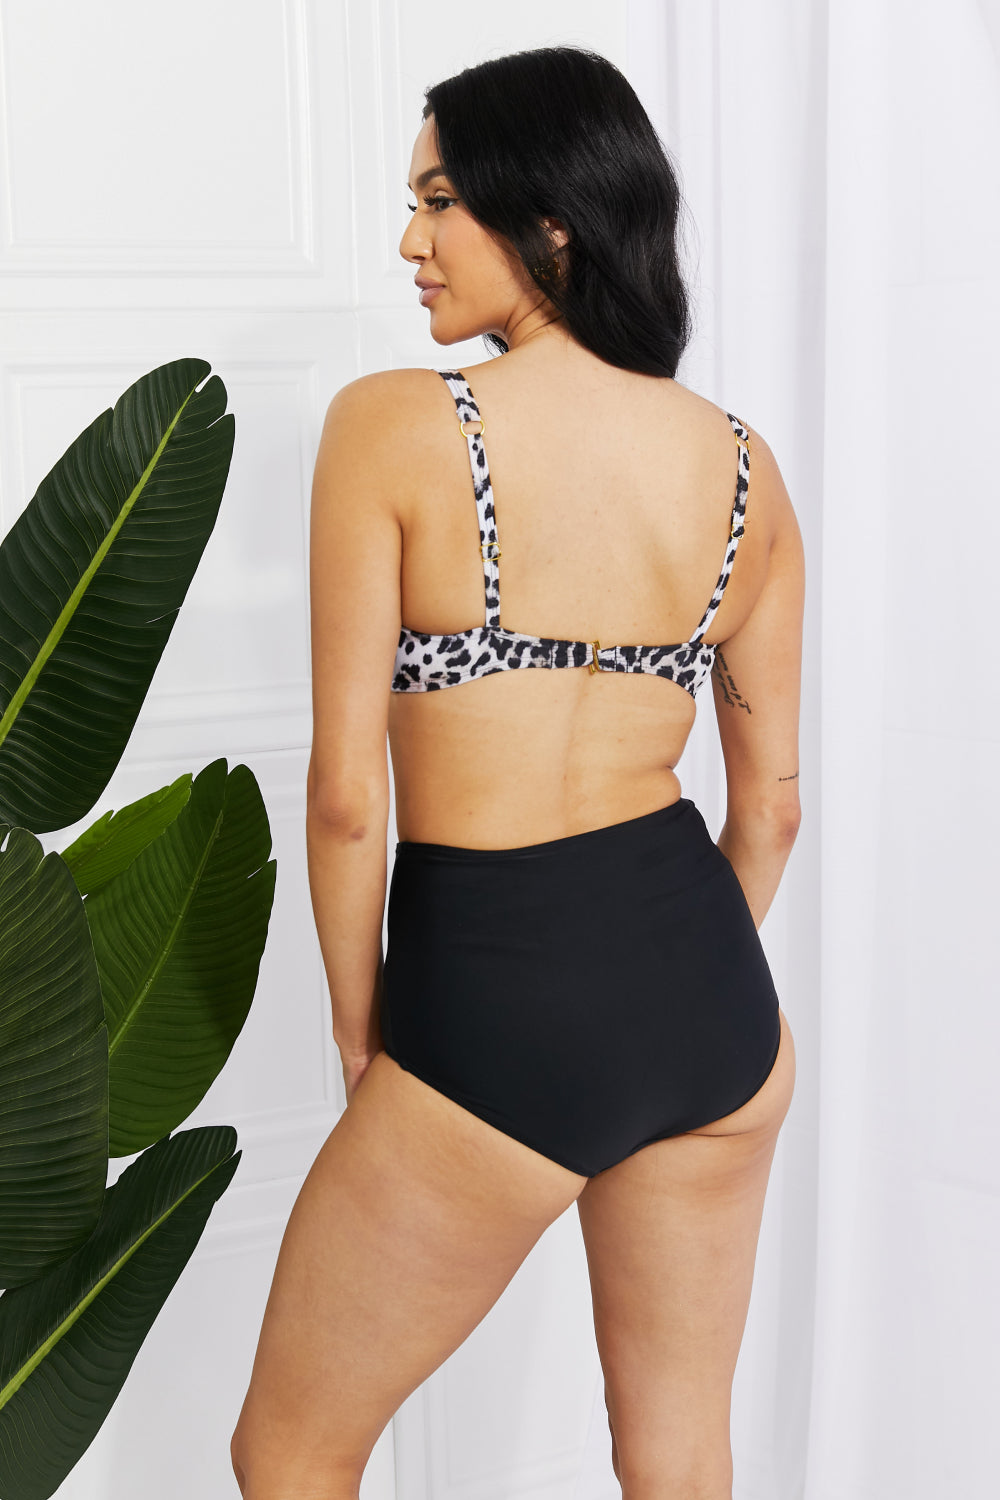 Marina West Swim Take A Dip Twist High-Rise Bikini in Leopard Print on any thing USA/STOD clothes